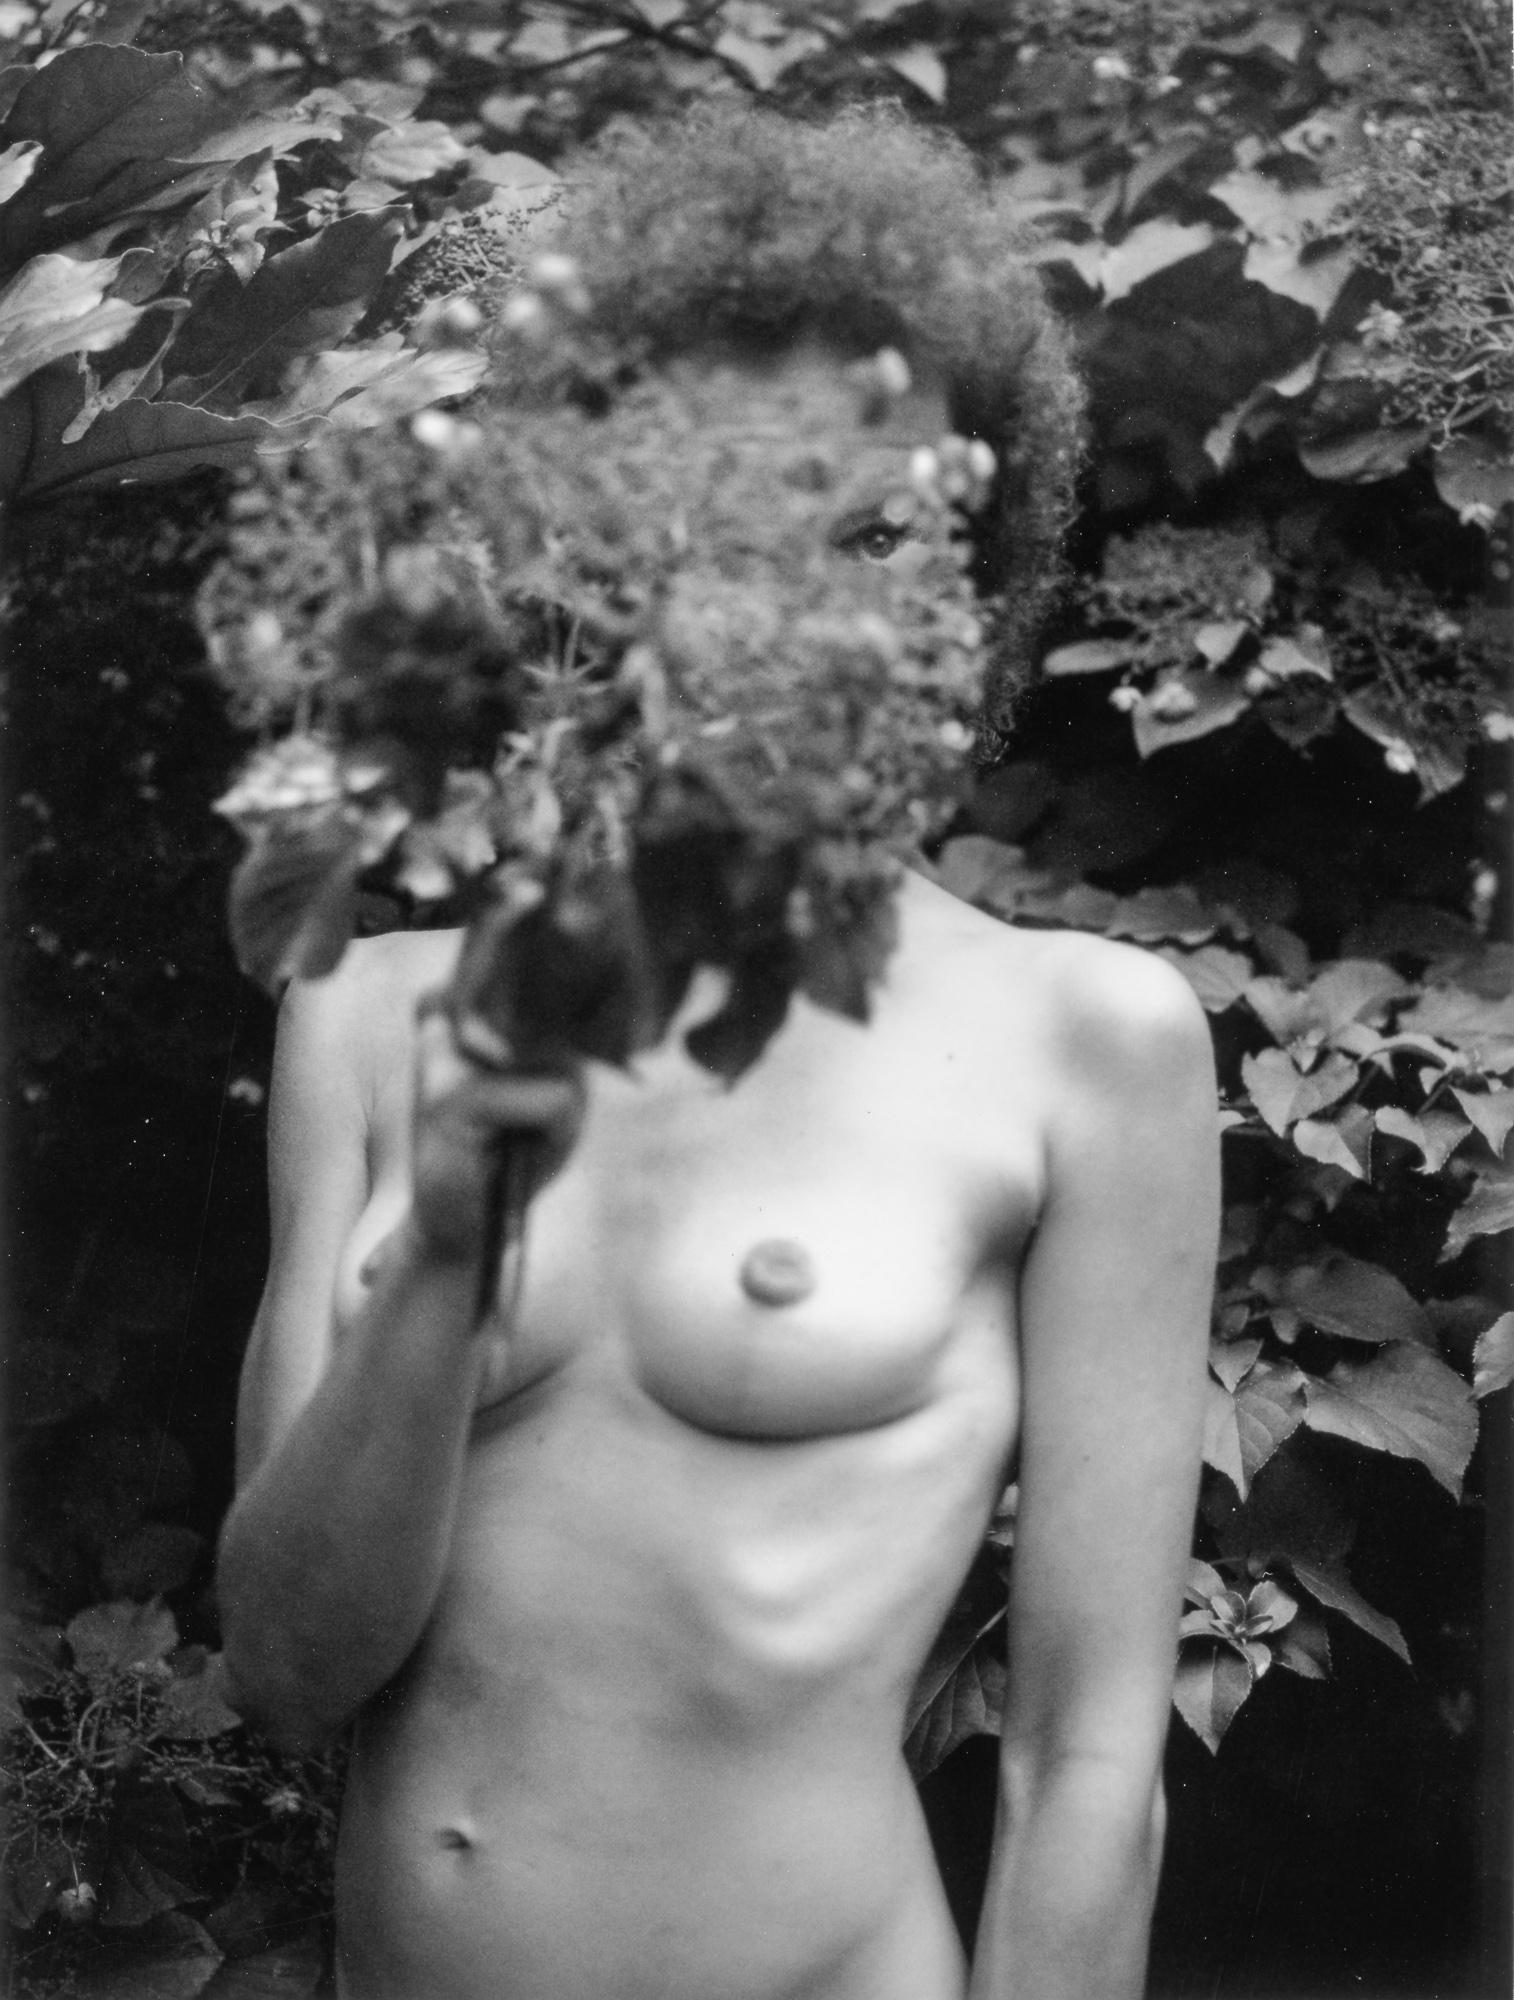 Kirsten Thys van den Audenaerde Black and White Photograph - The Eye of the Beholder, 21st Century, Polaroid, Nude Photography, Contemporary